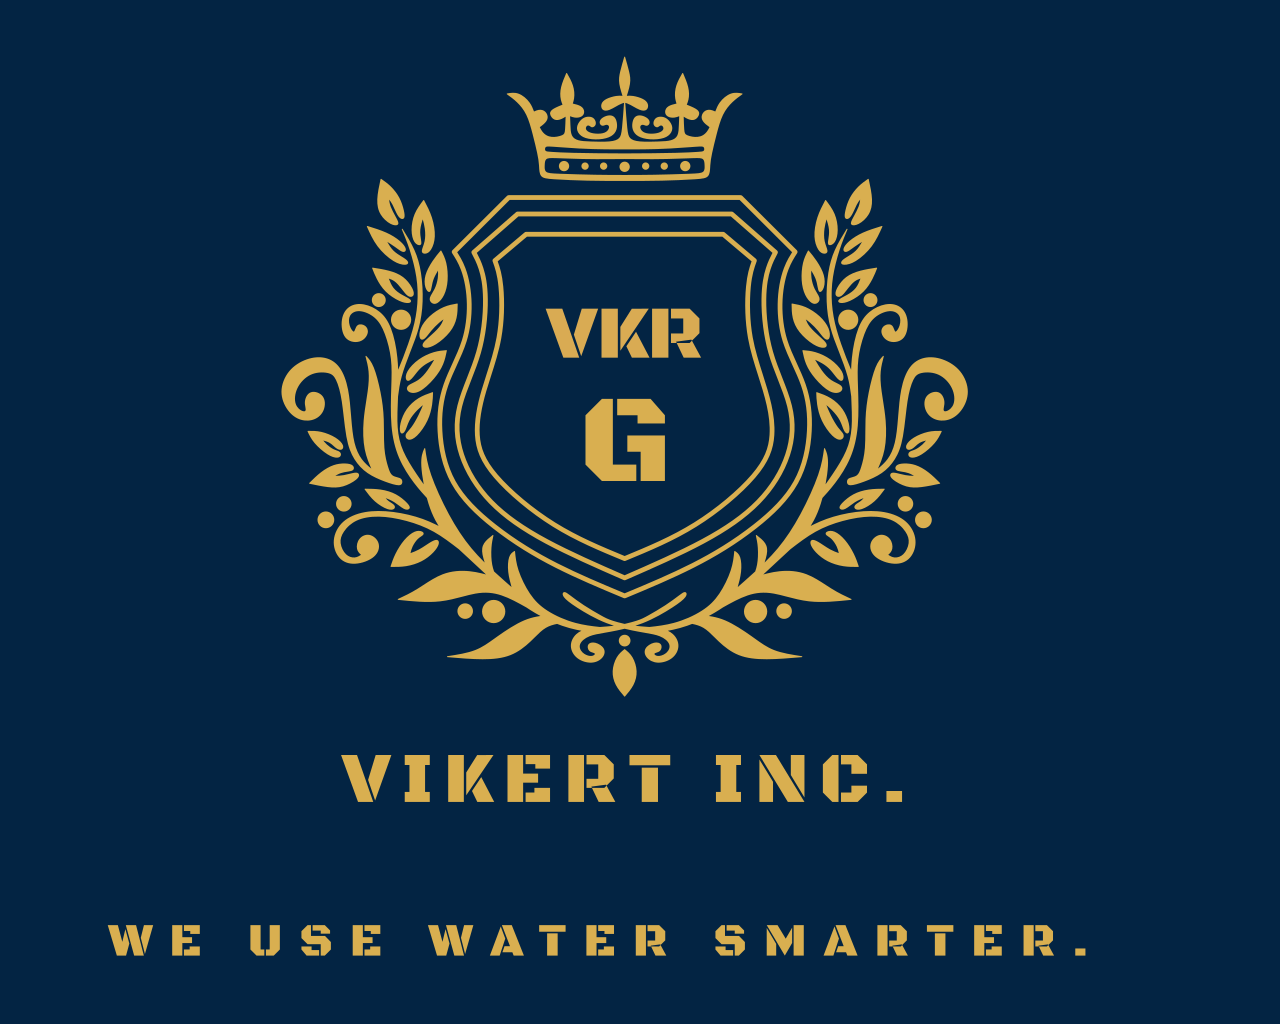 VIKERT INC.'s logo